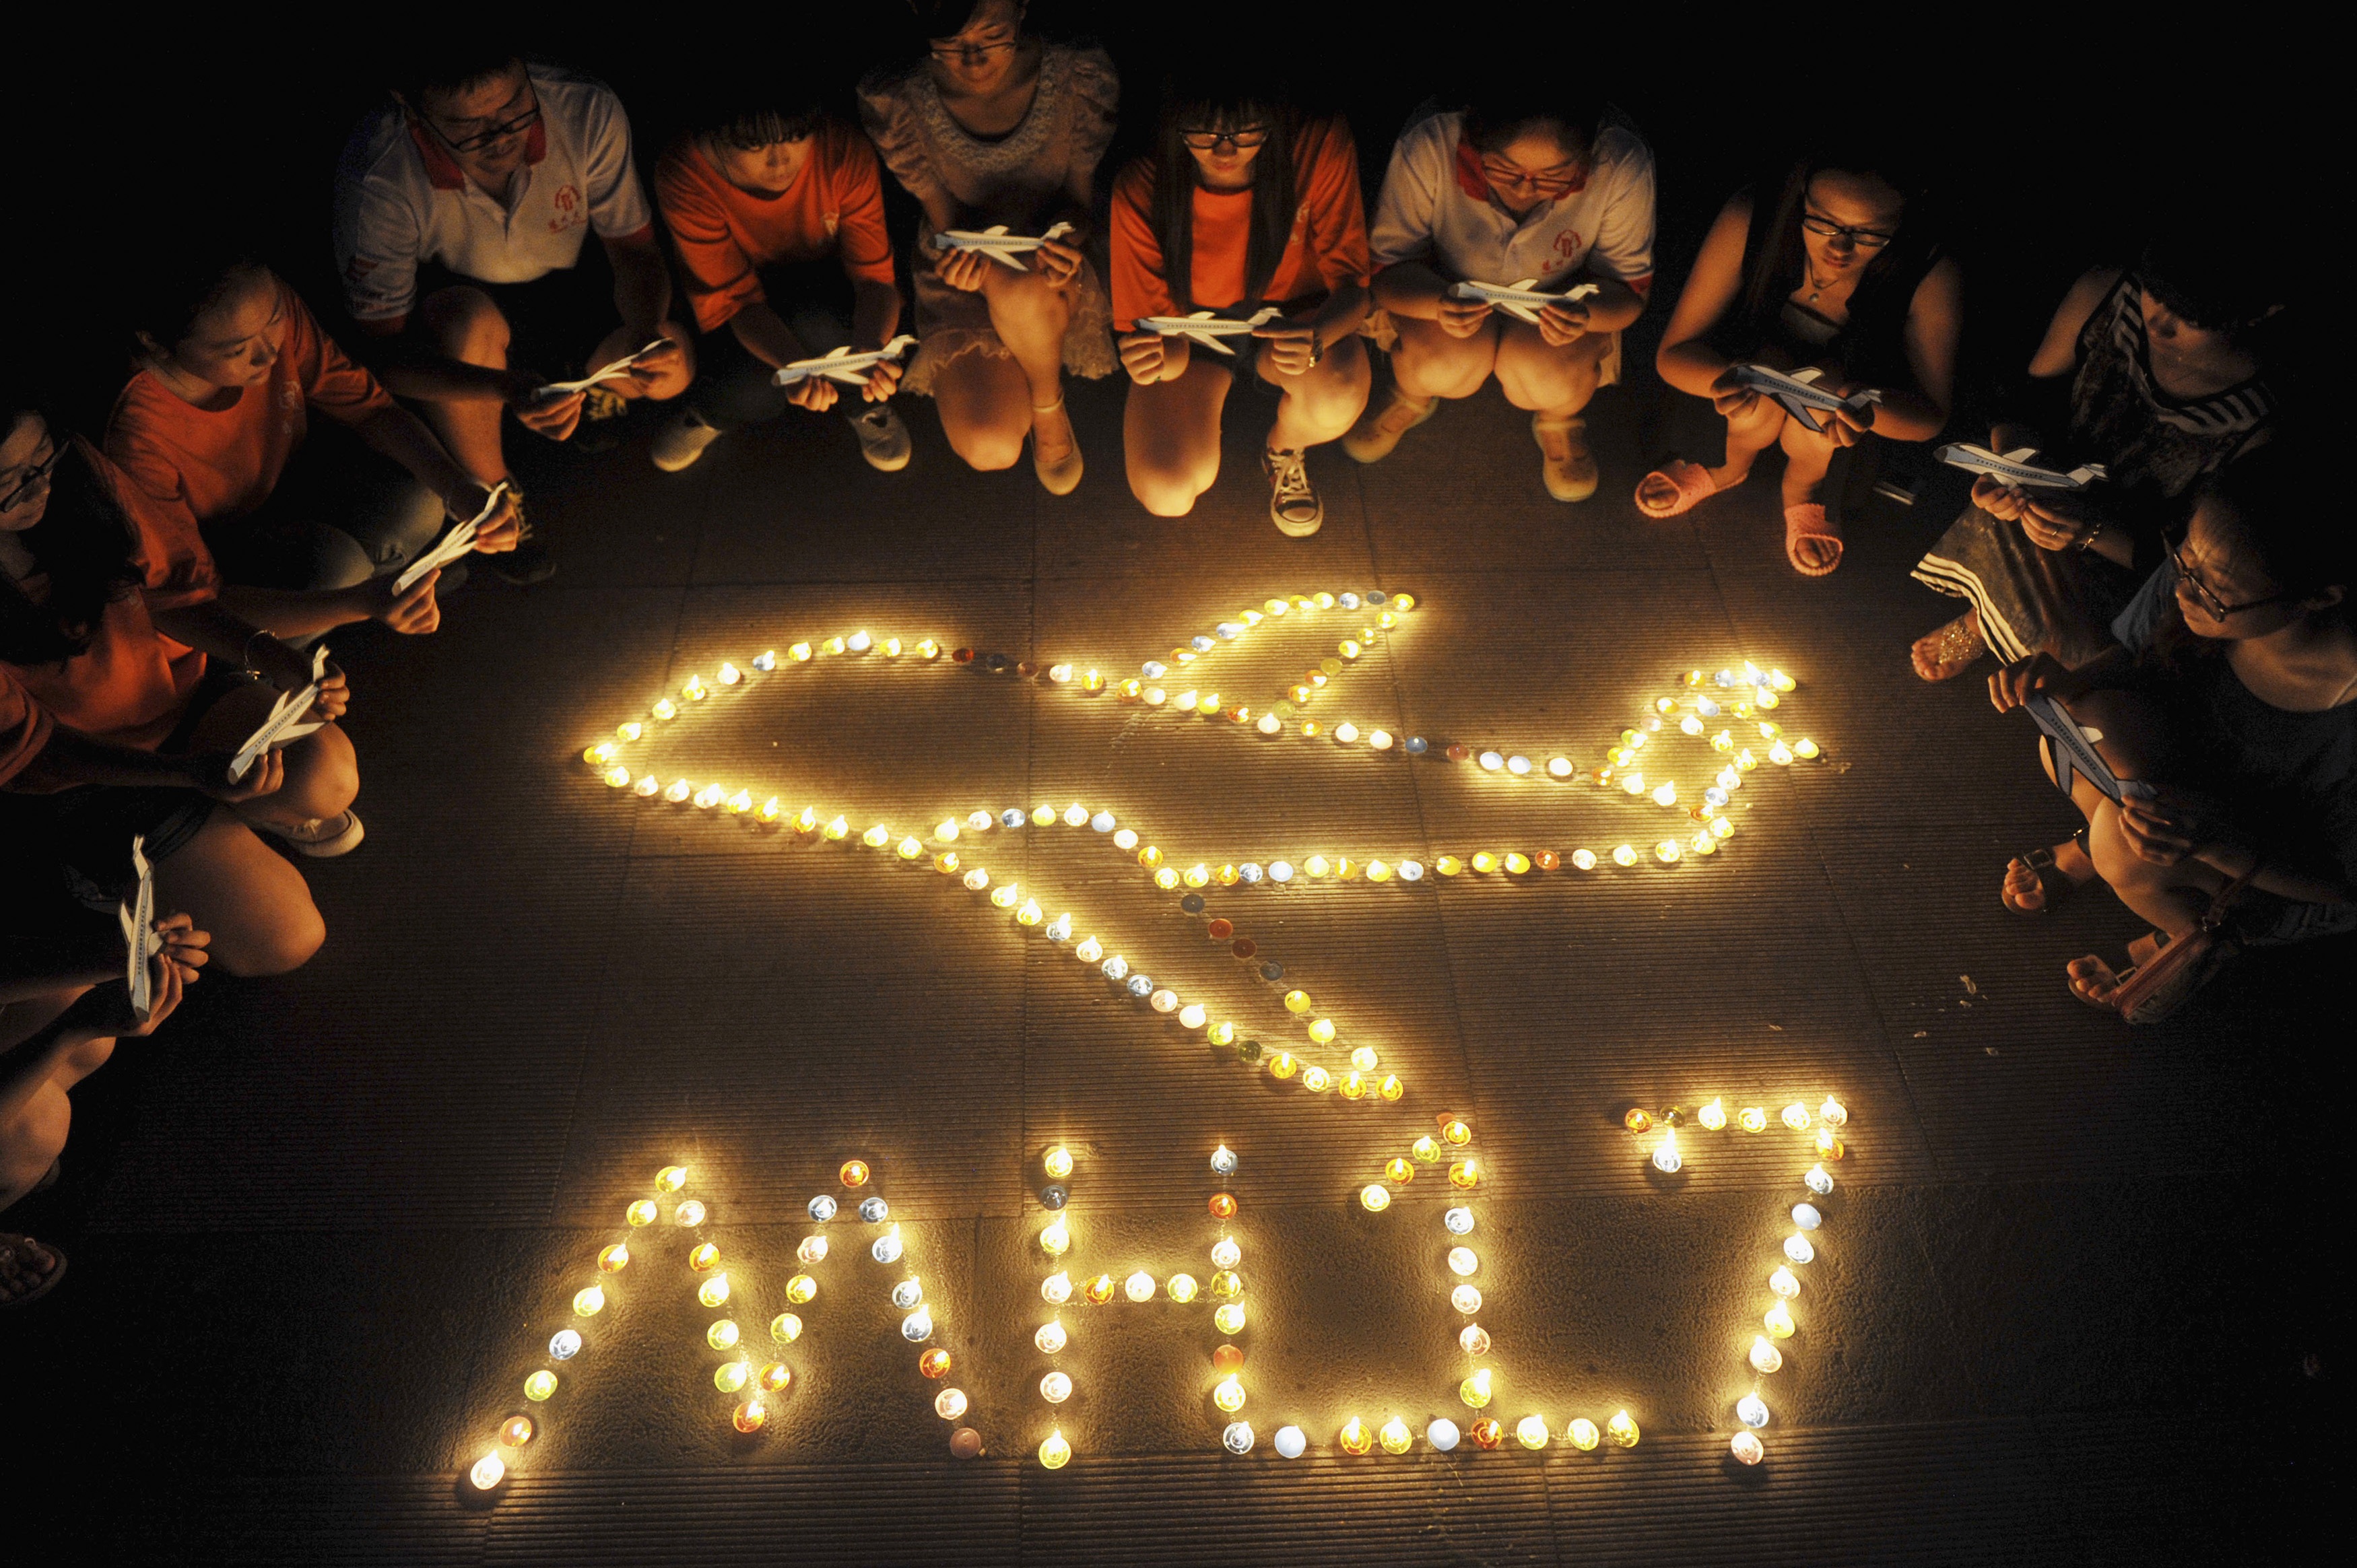 Homenaje al avión MH17 derribado por un misil en Ucrania
POLITICA INTERNACIONAL UCRANIA EUROPA
CHINA STRINGER NETWORK / REUT
